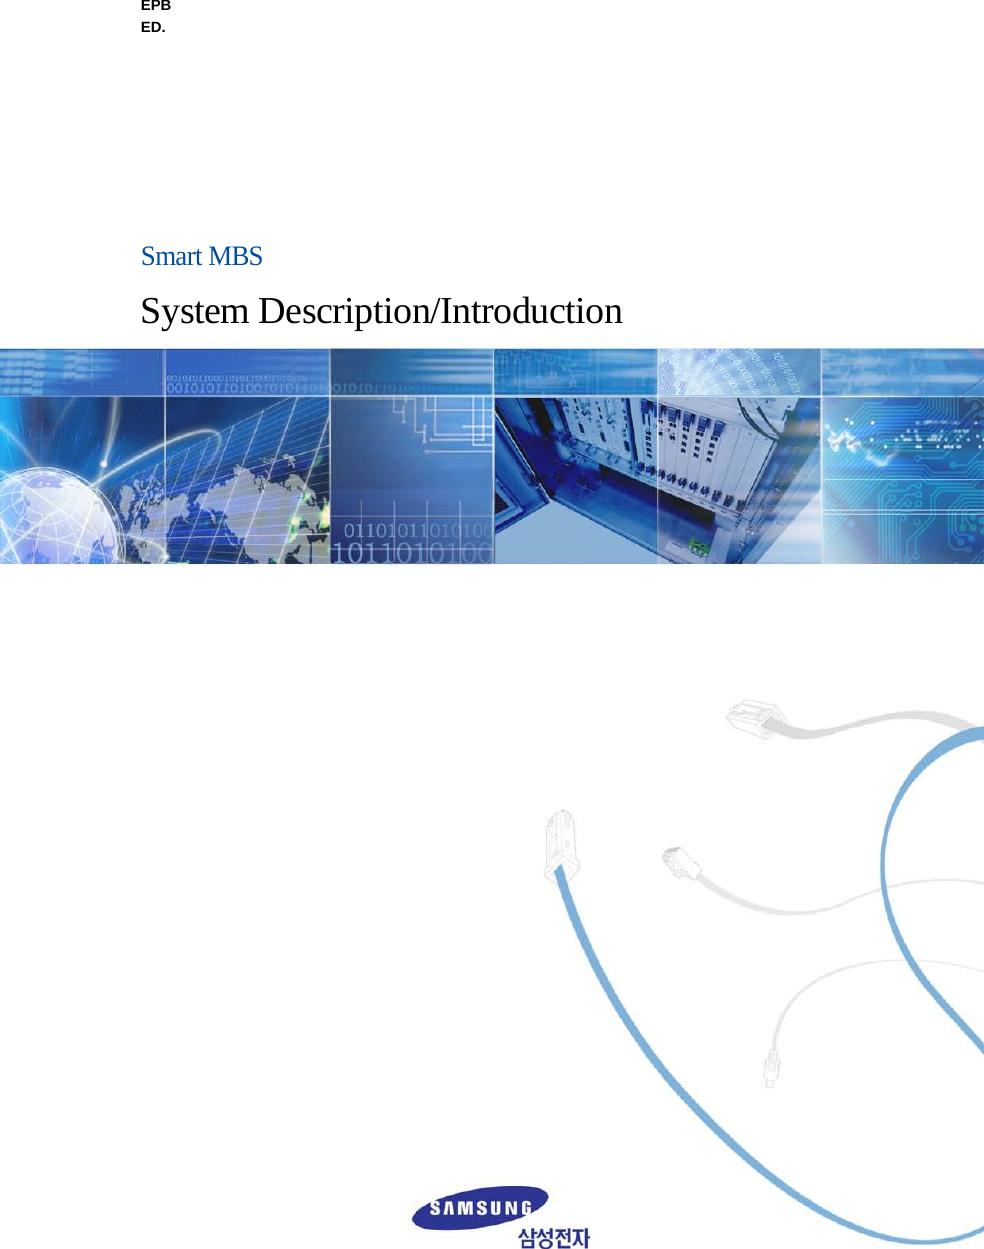 EPB ED.           Smart MBS   System Description/Introduction   